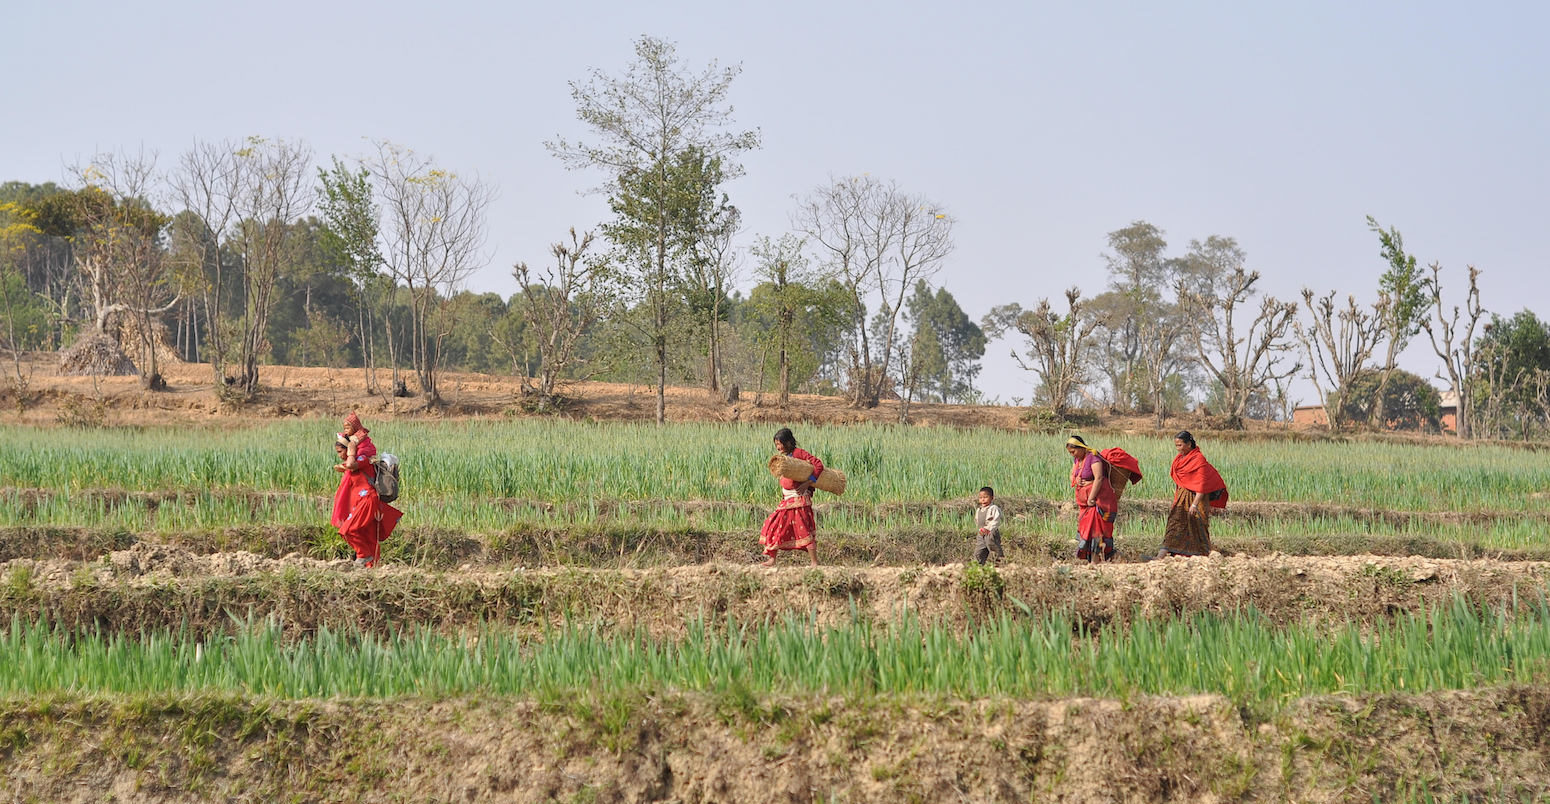 Women and children walking in the fields